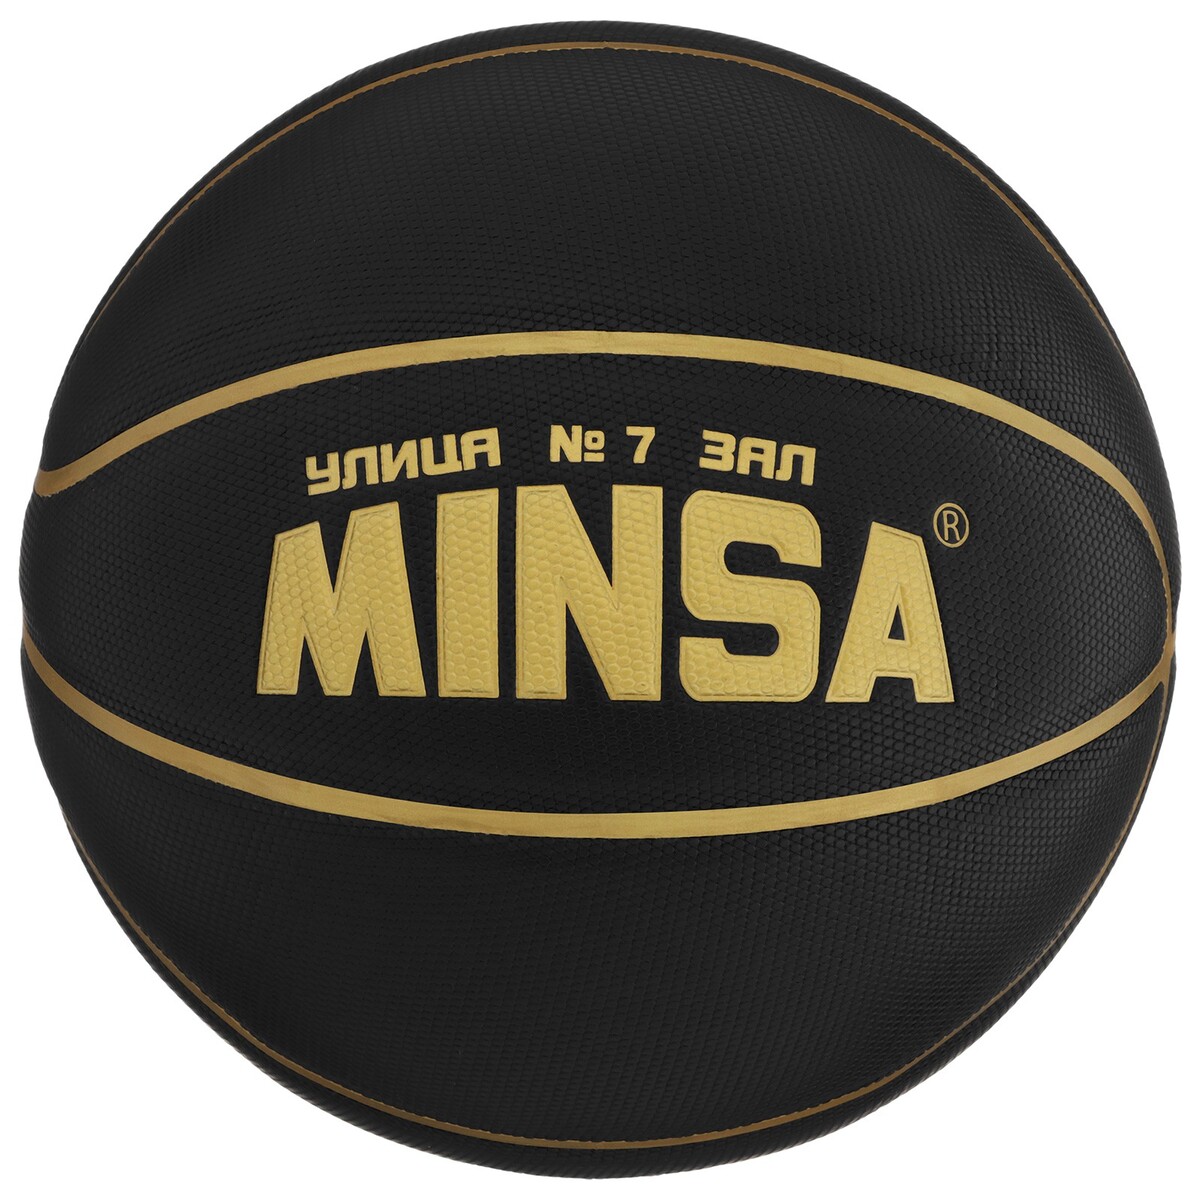 Баскетбольный мяч minsa, pu, размер 7, 600 г баскетбольный мяч разм 7 spalding excel tf500 77 204z